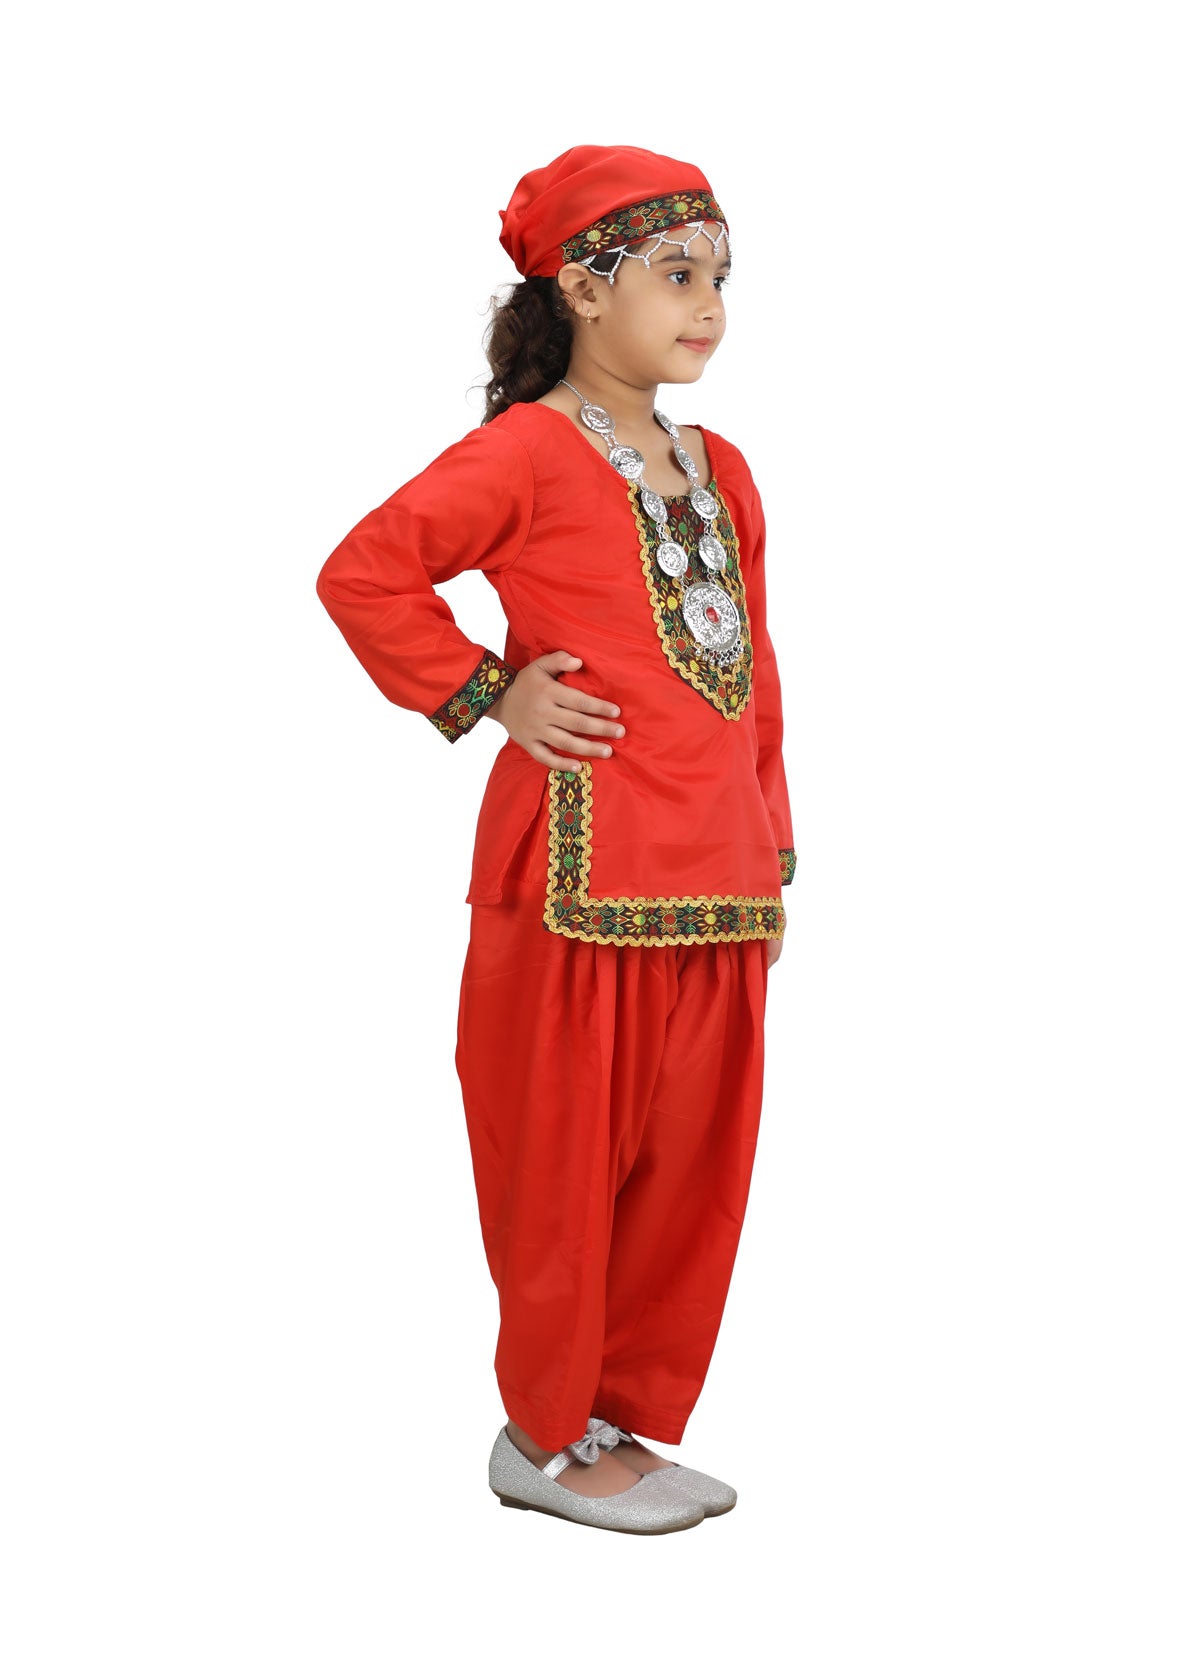 kashmiri women in traditional dress